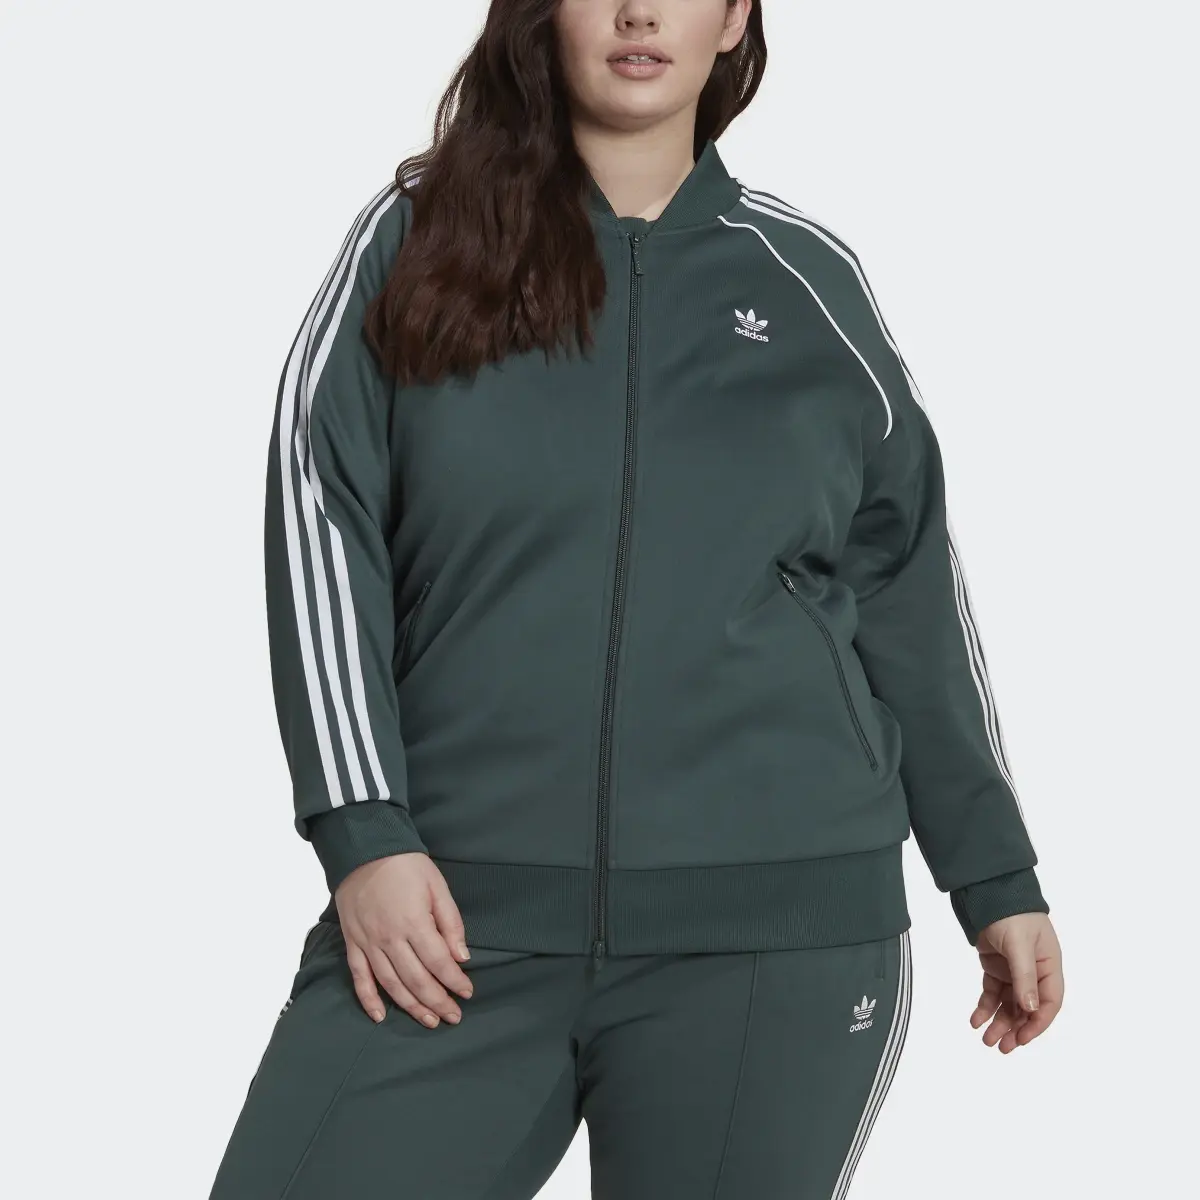 Adidas Primeblue SST Originals Jacke – Große Größen. 1